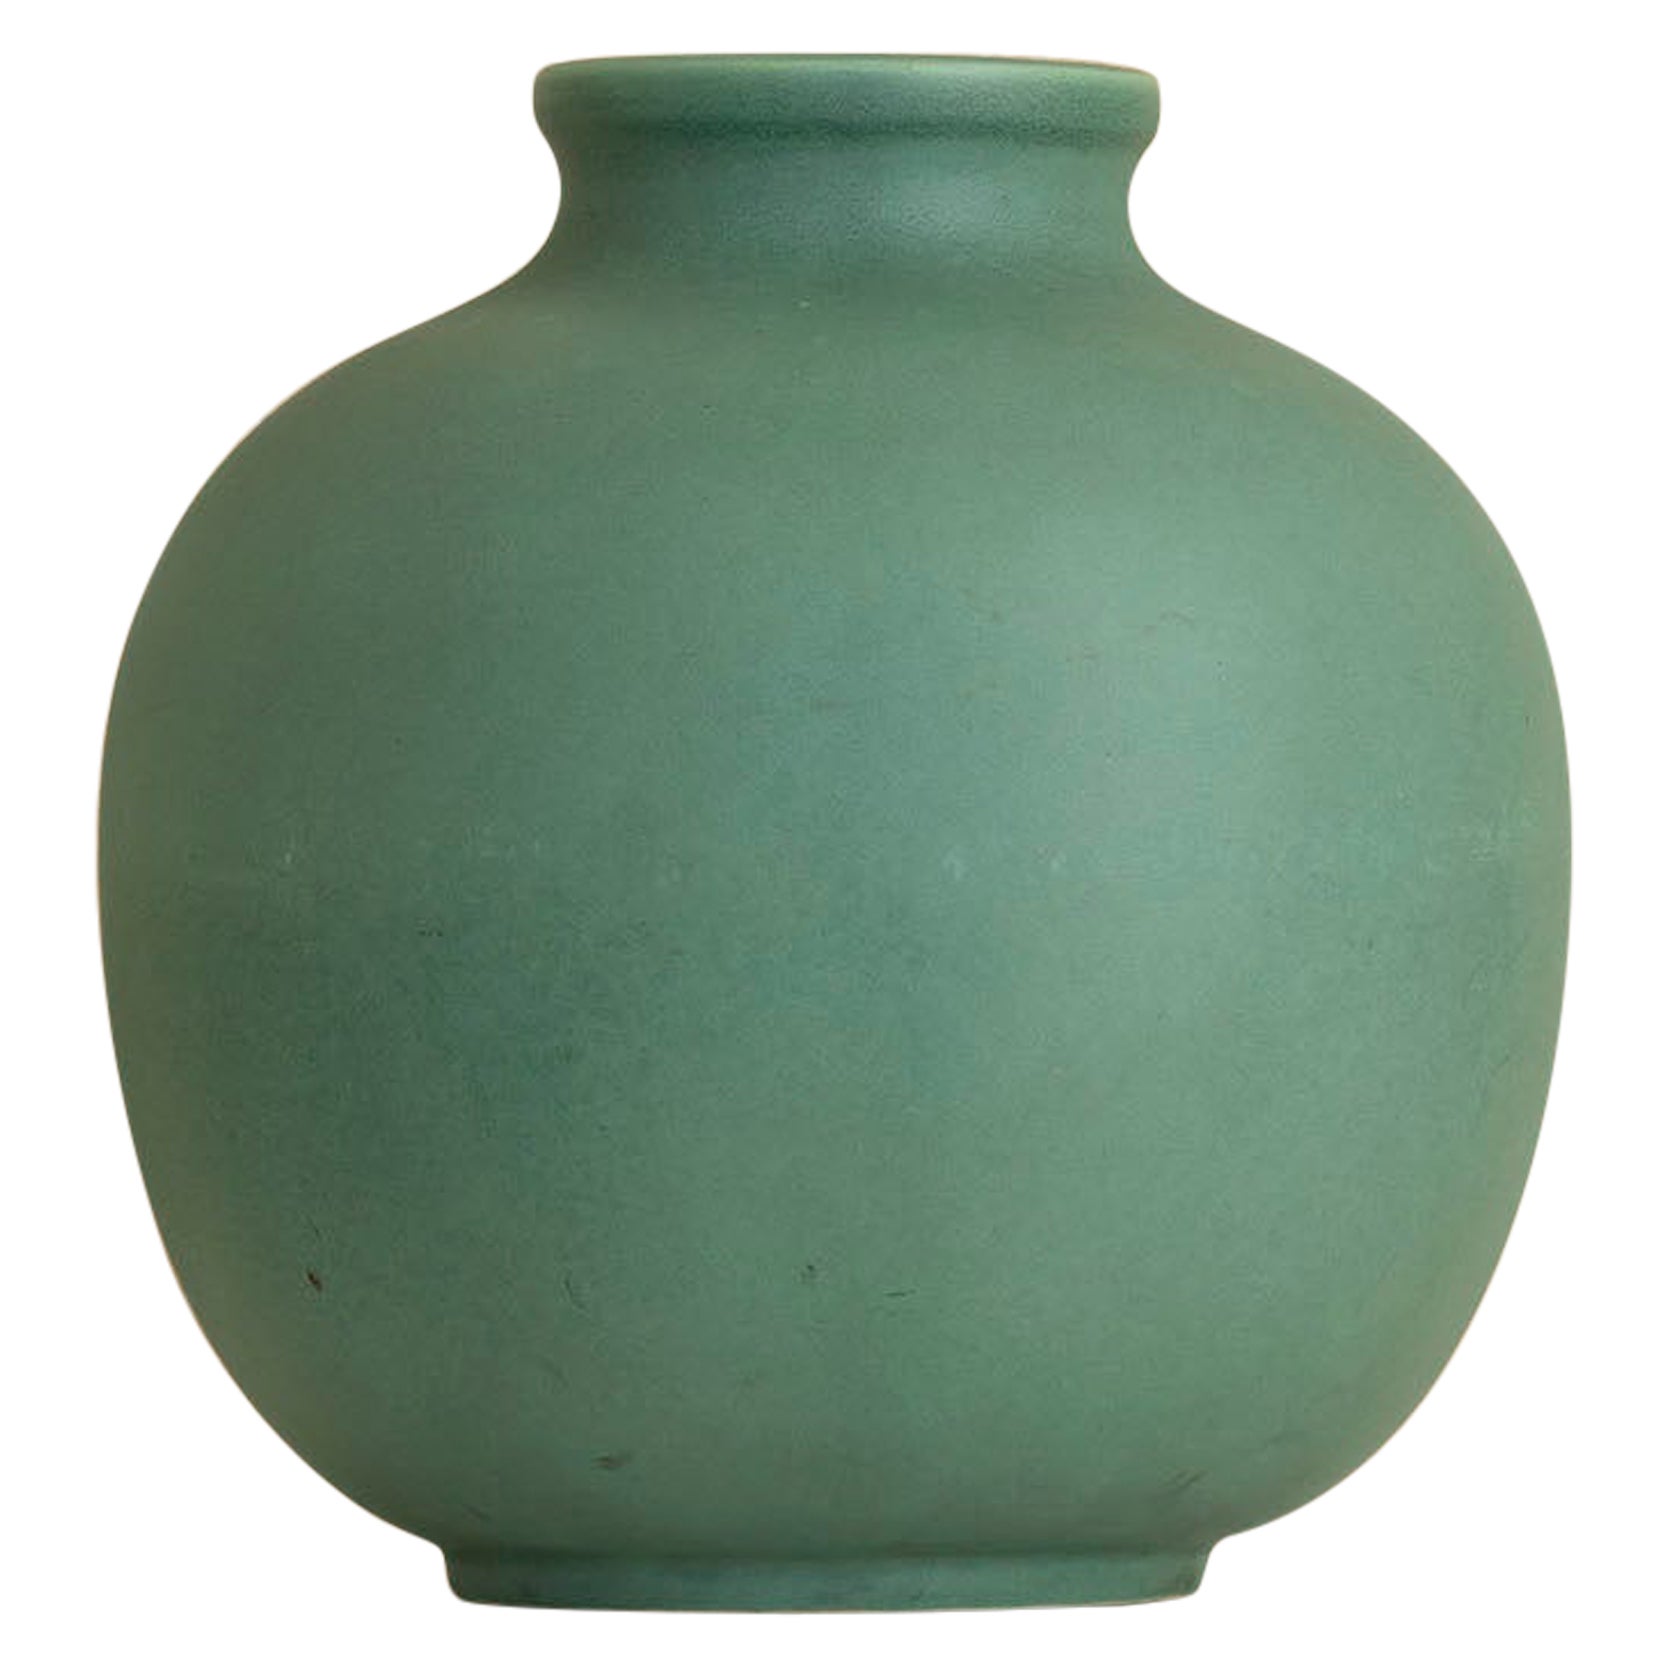 Midcentury ceramic vase by Gio Ponti for Richard Ginori, Italy 1940s